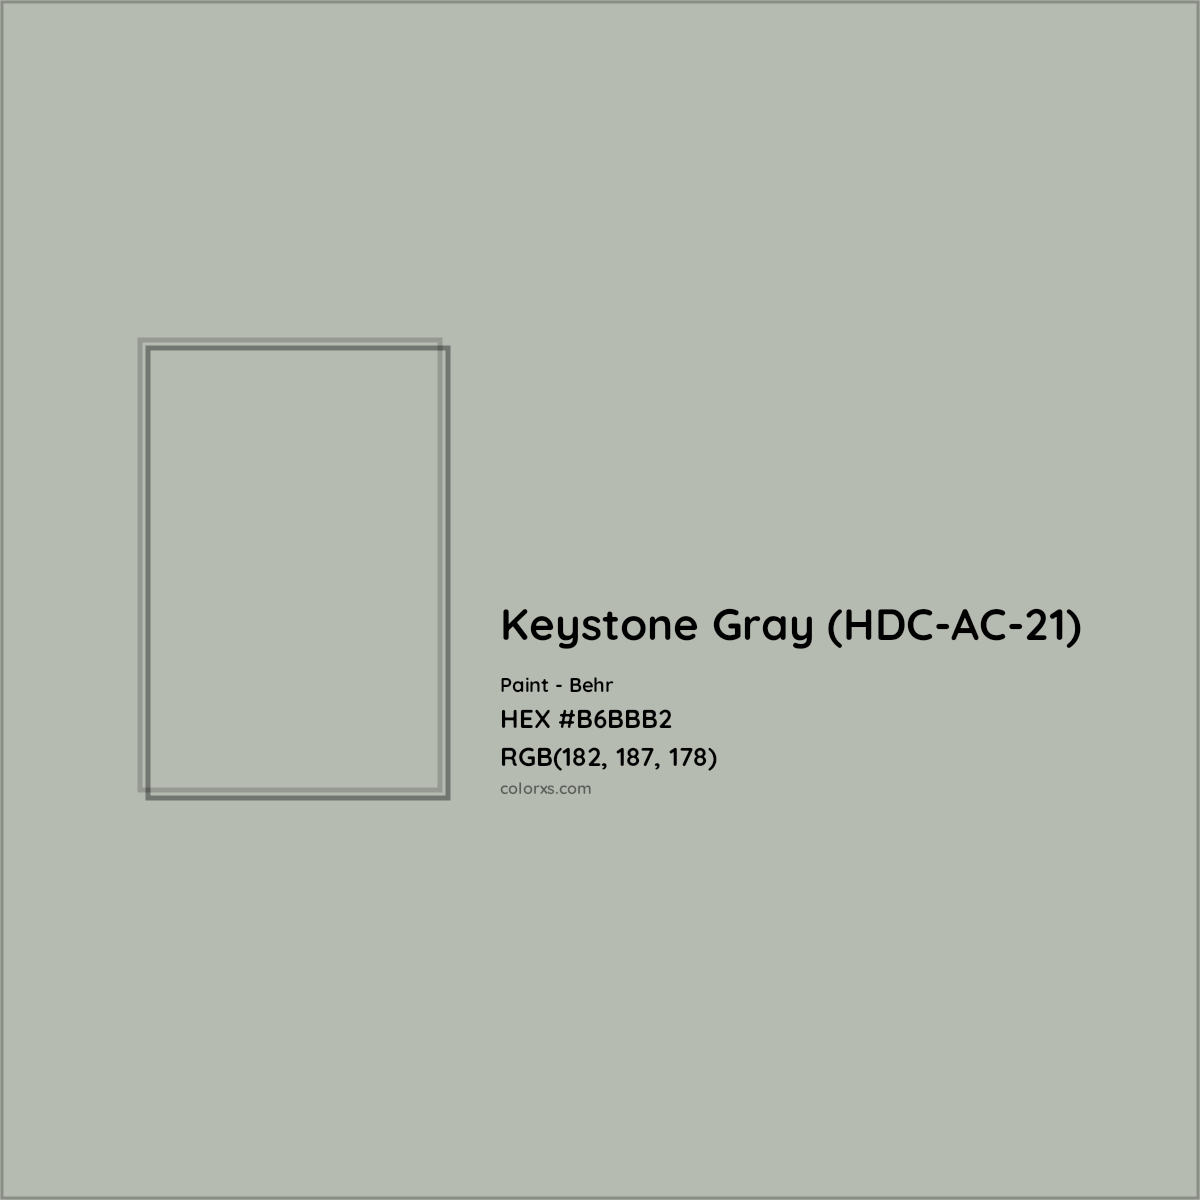 HEX #B6BBB2 Keystone Gray (HDC-AC-21) Paint Behr - Color Code